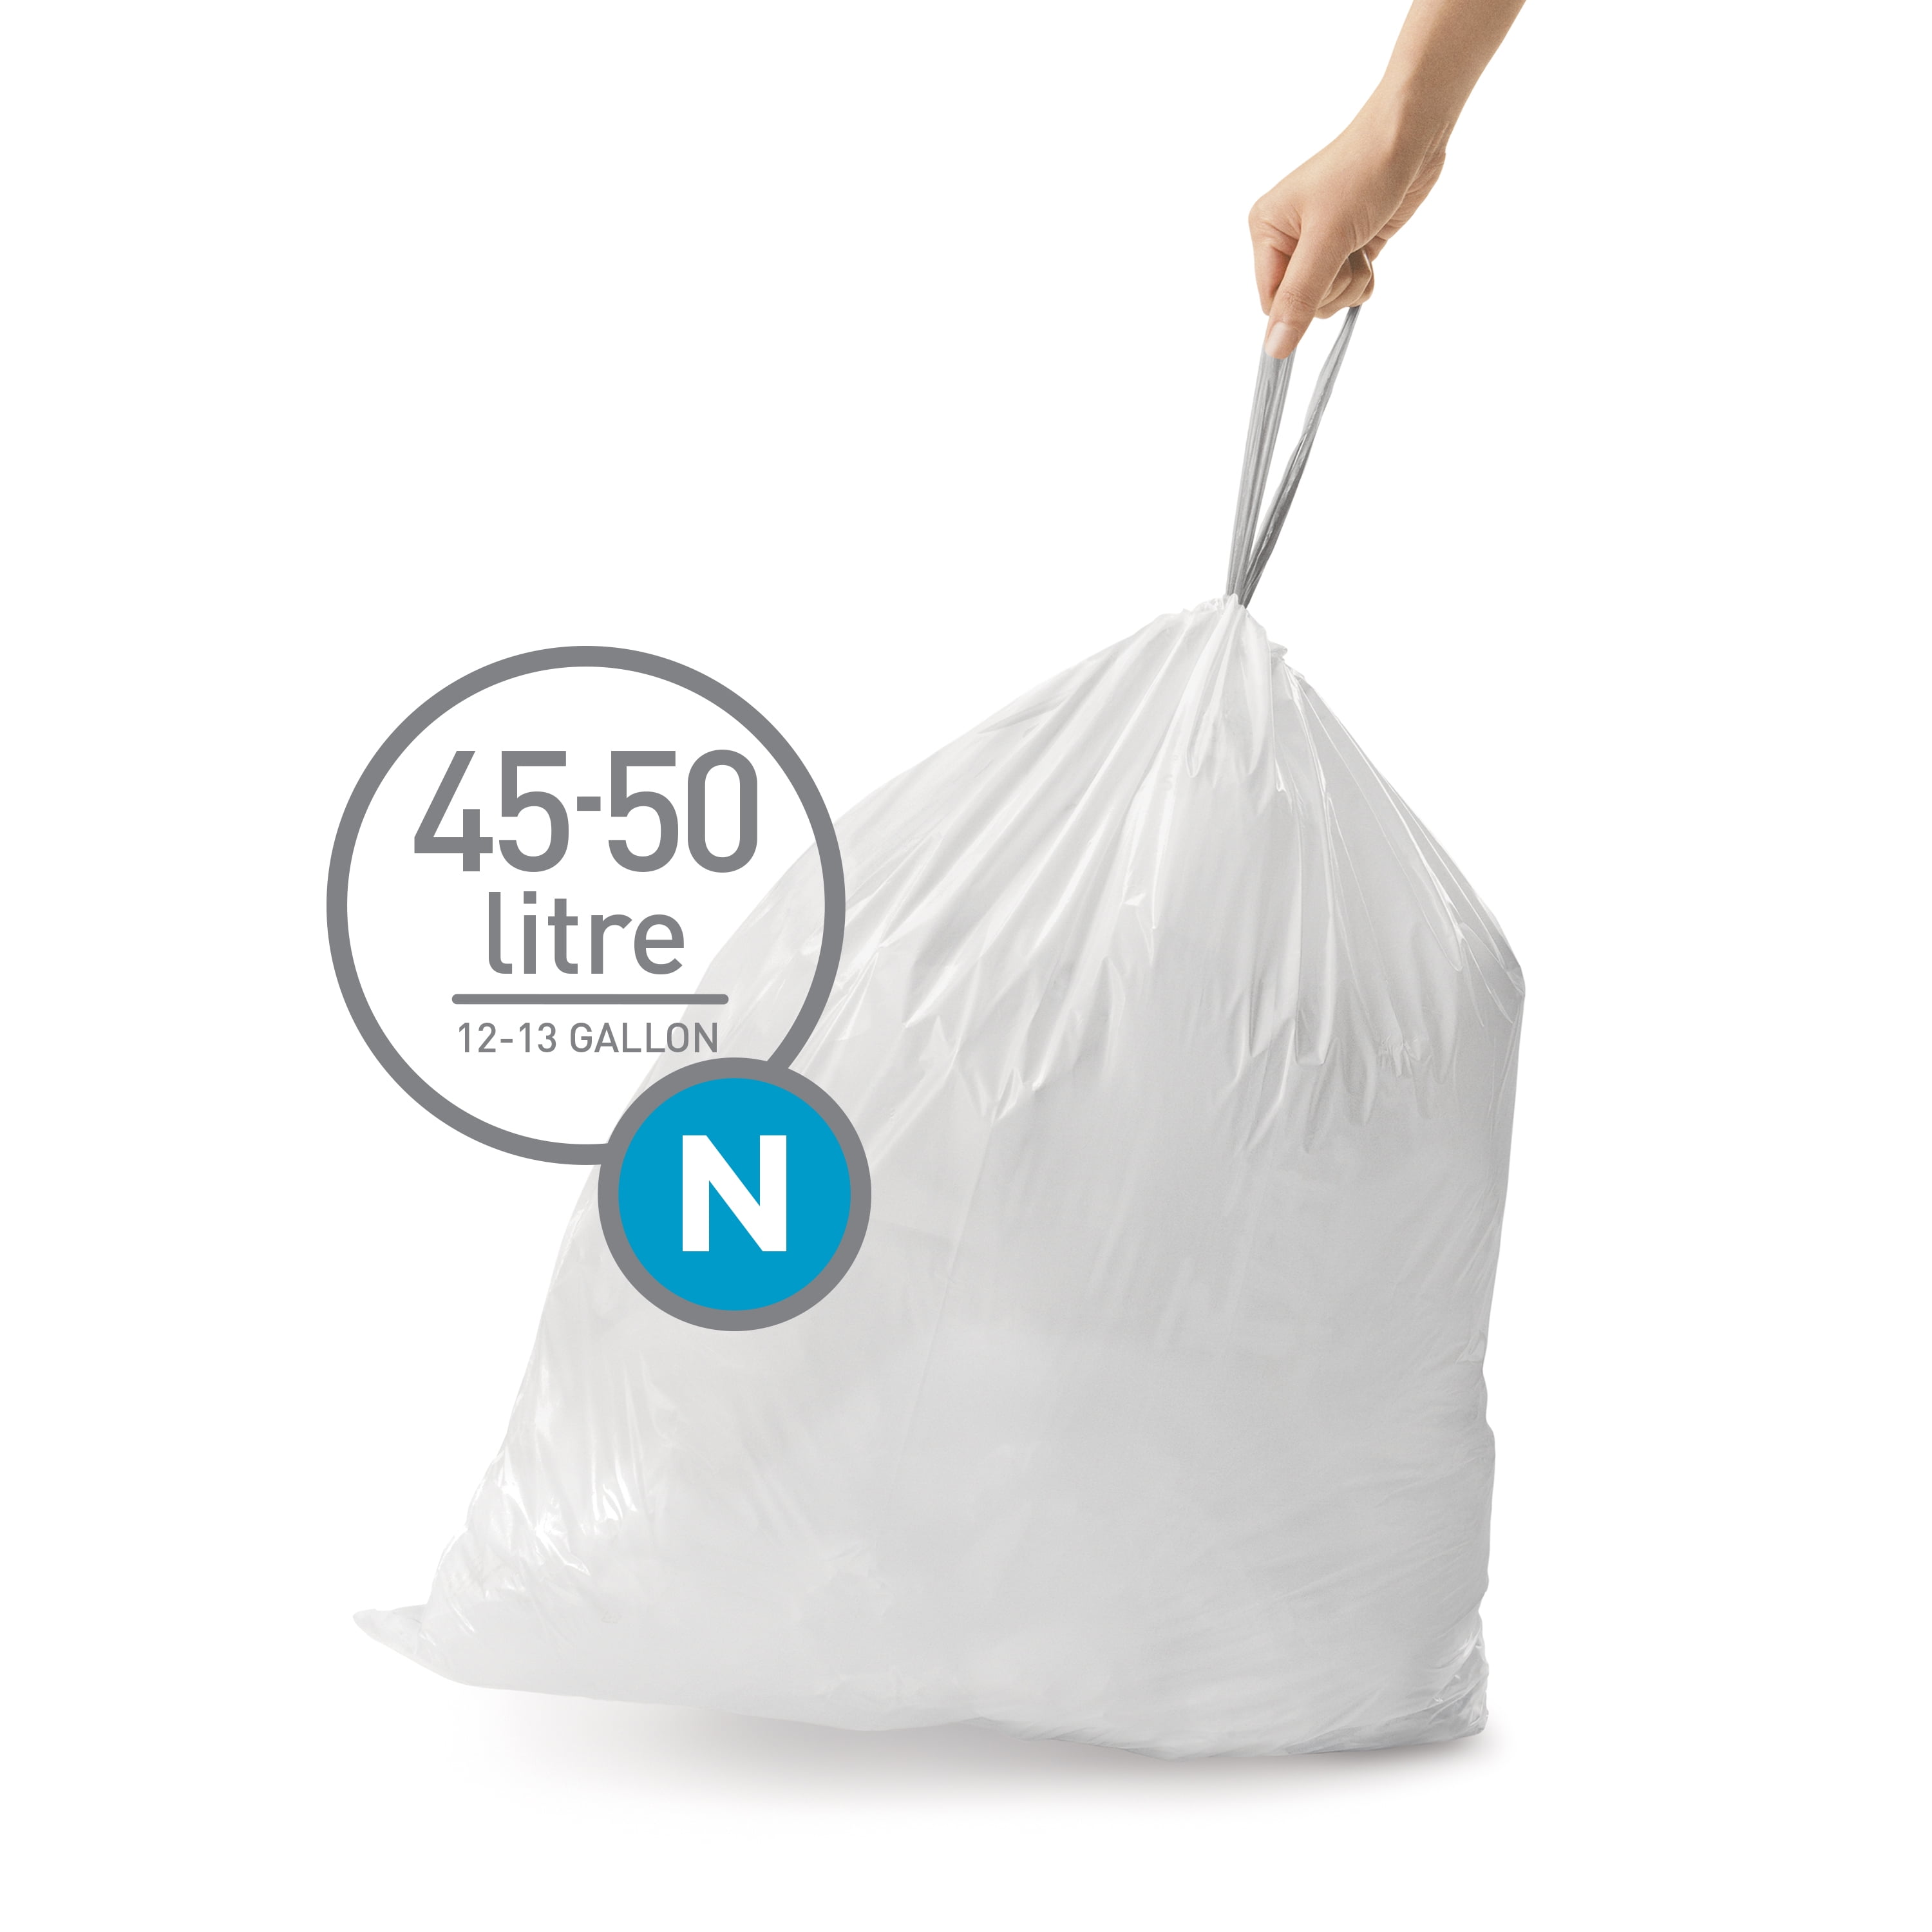 45-50 Liter 12-13 Gallon simplehuman Code N Custom Fit Drawstring Trash Bags 